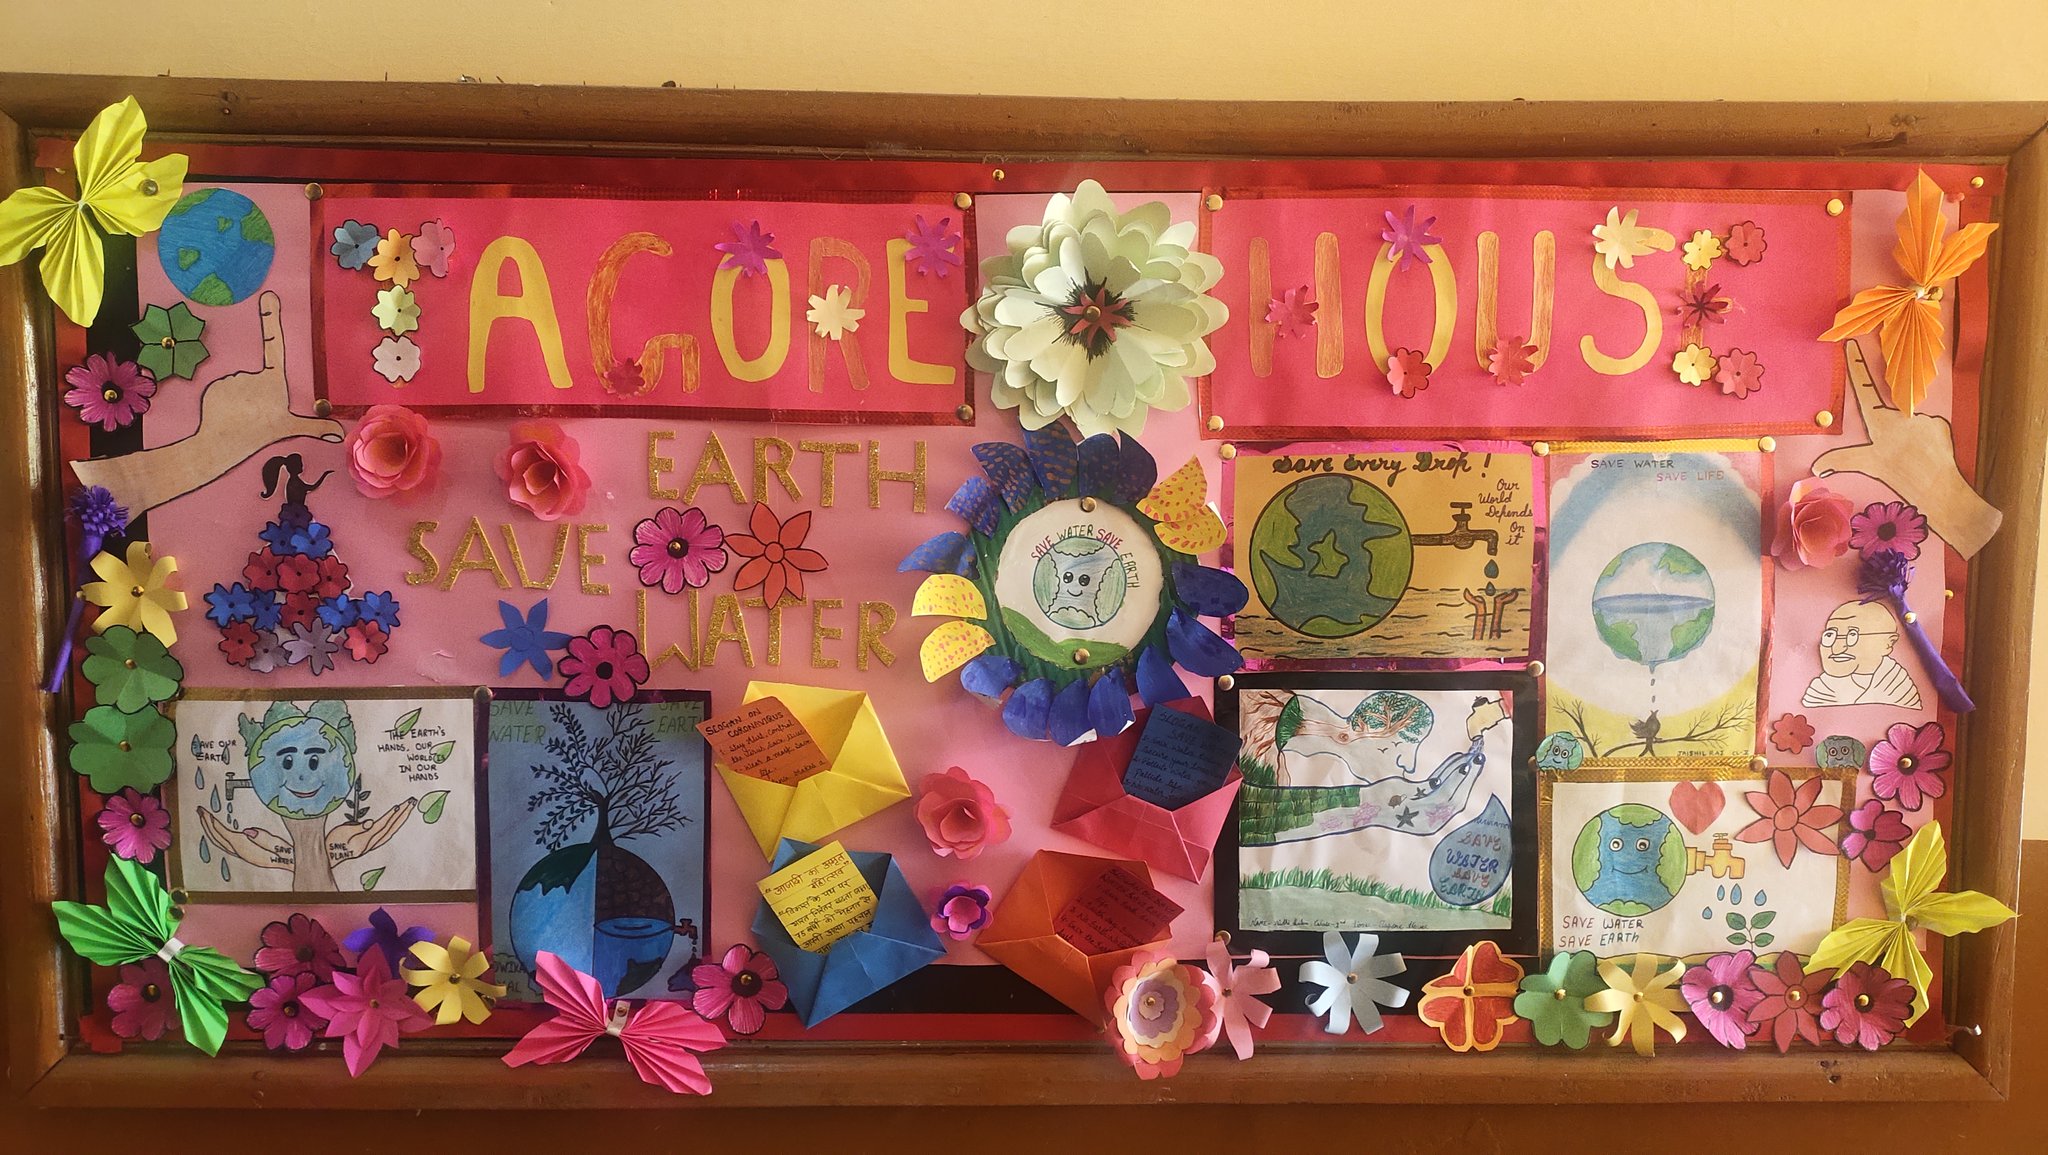 Save the earth | School board decoration, Bulletin boards classroom decor,  Earth day crafts